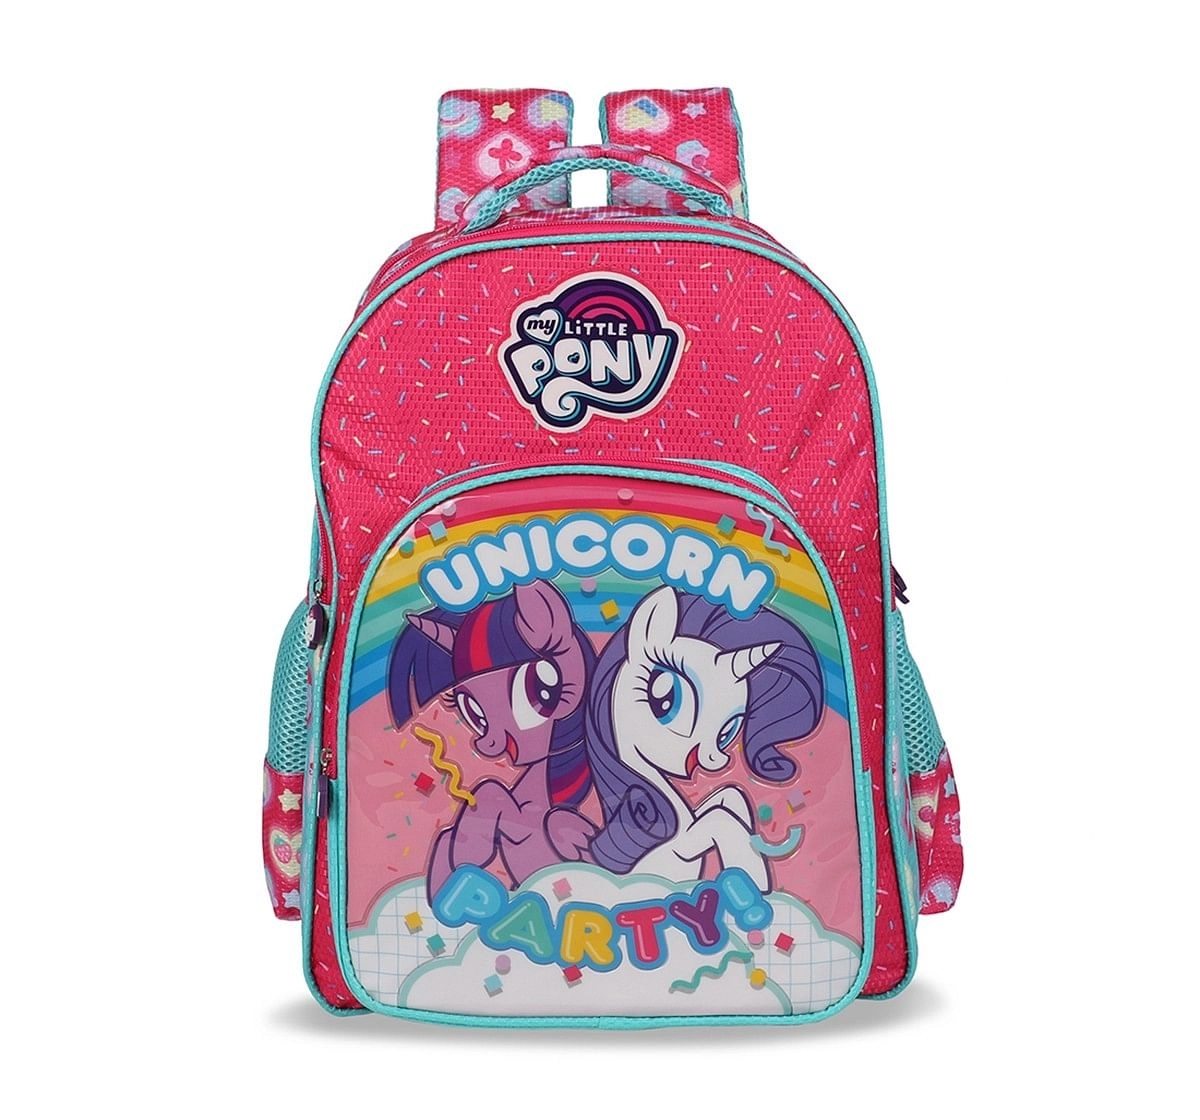 Share 69+ unicorn bag for kids - in.duhocakina